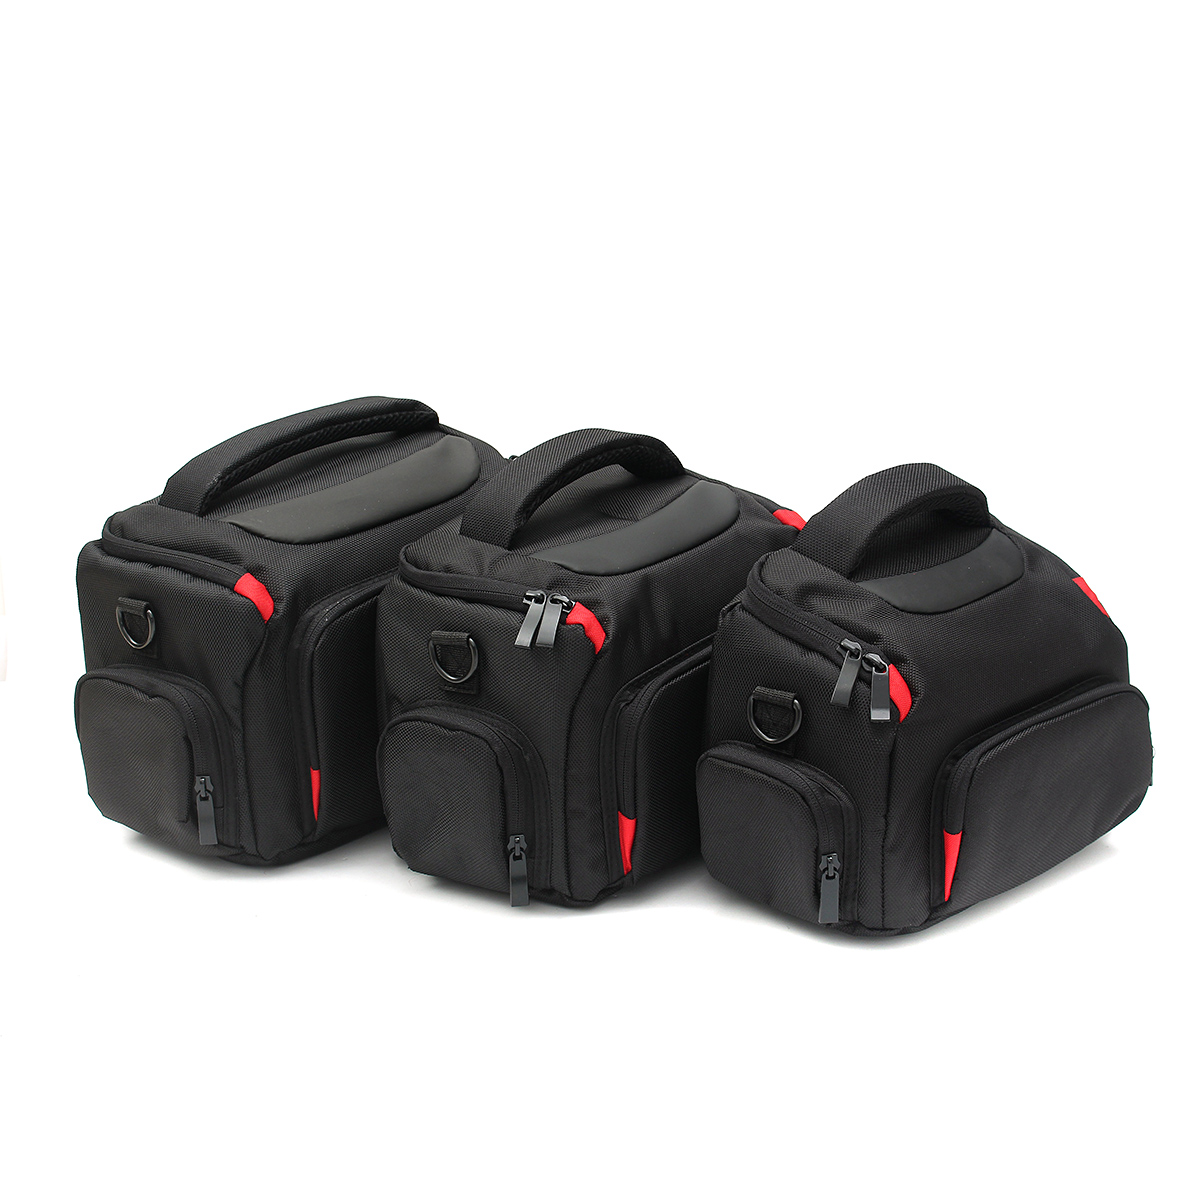 Camera-Storage-Travel-Carry-Bag-with-Rain-Cover-Strap-for-DSLR-SLR-Camera-Camera-Lens-Flash-1632987-1